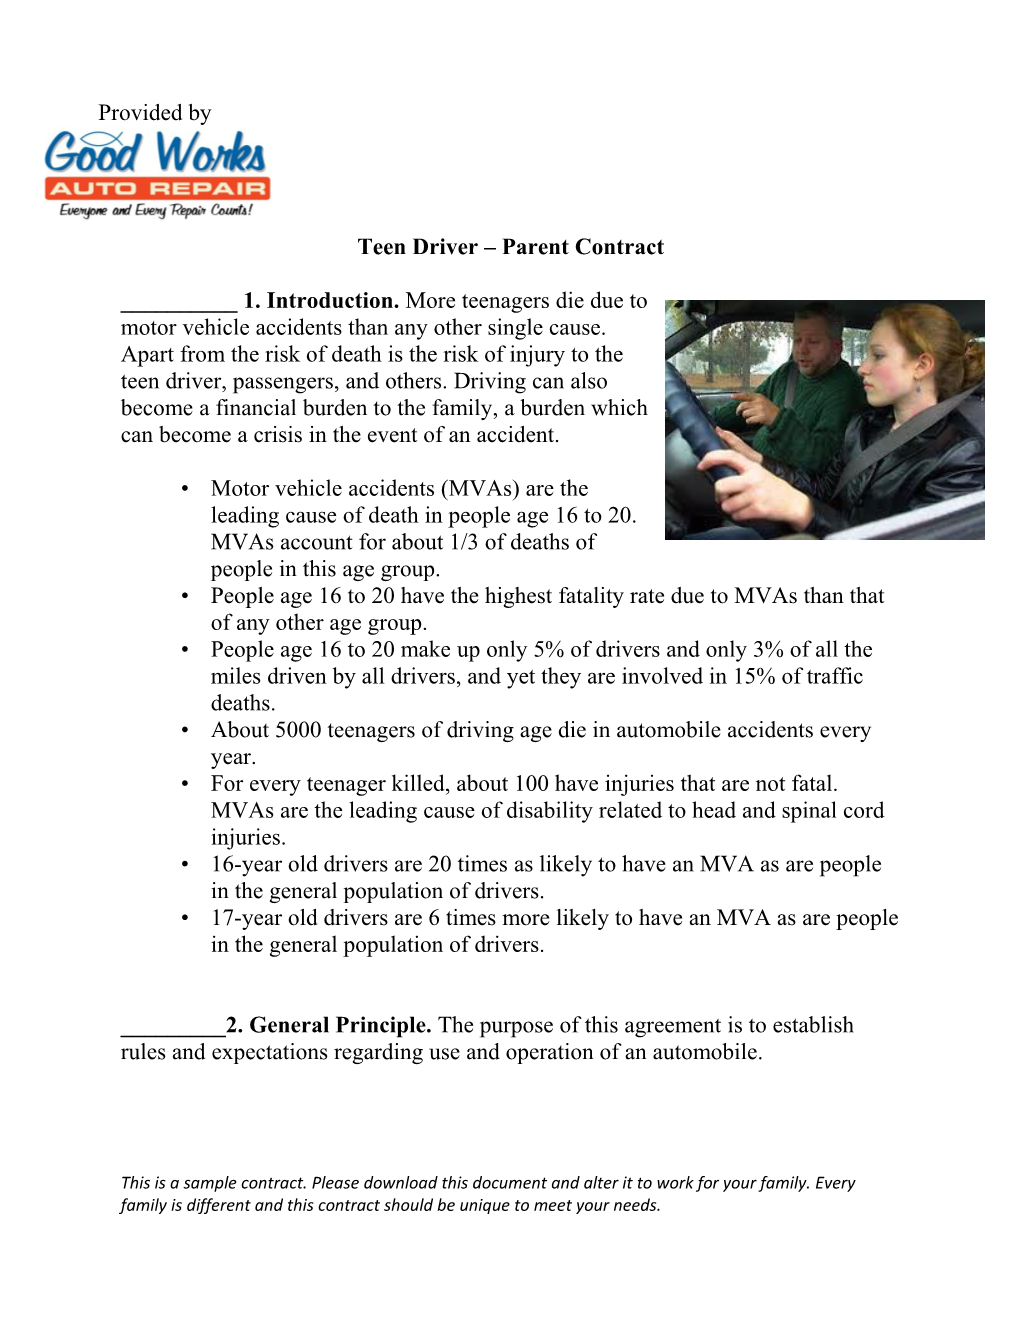 Teen Driver Parent Contract